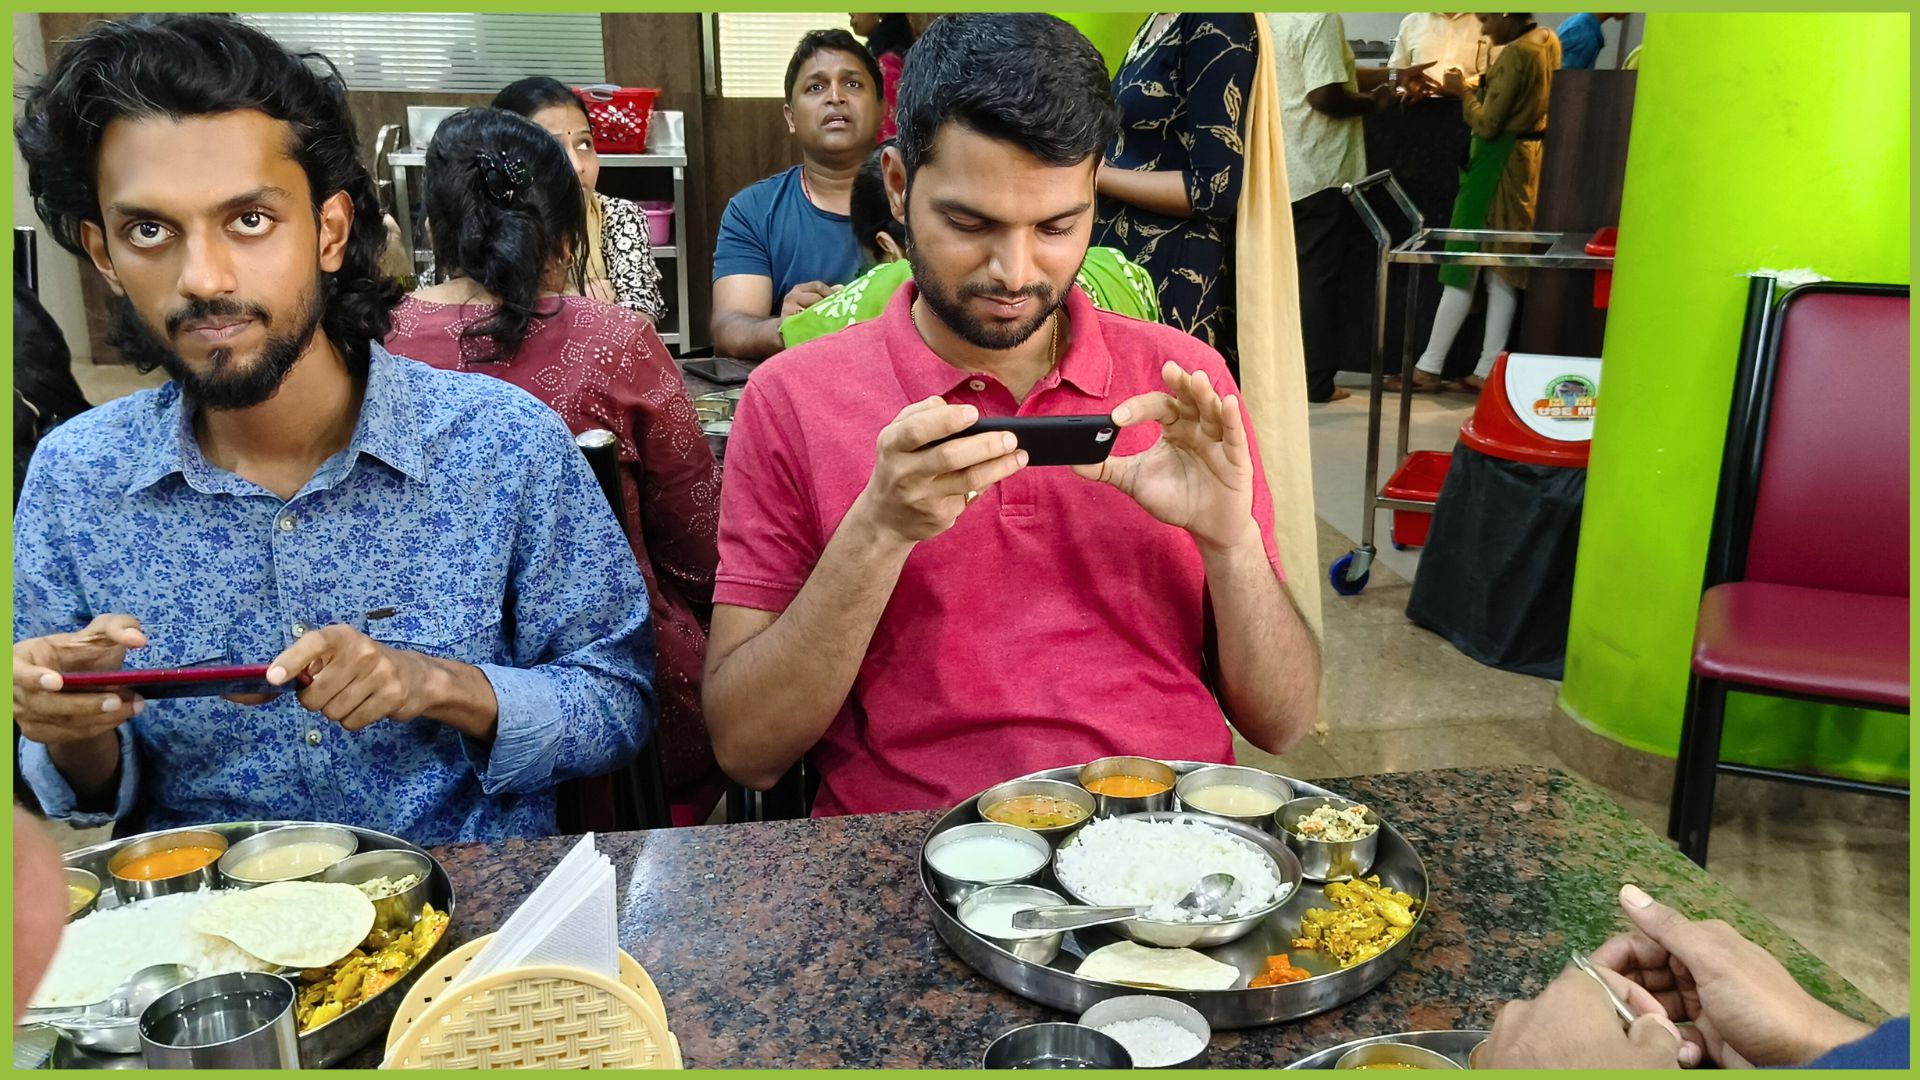 Customer taking food photo